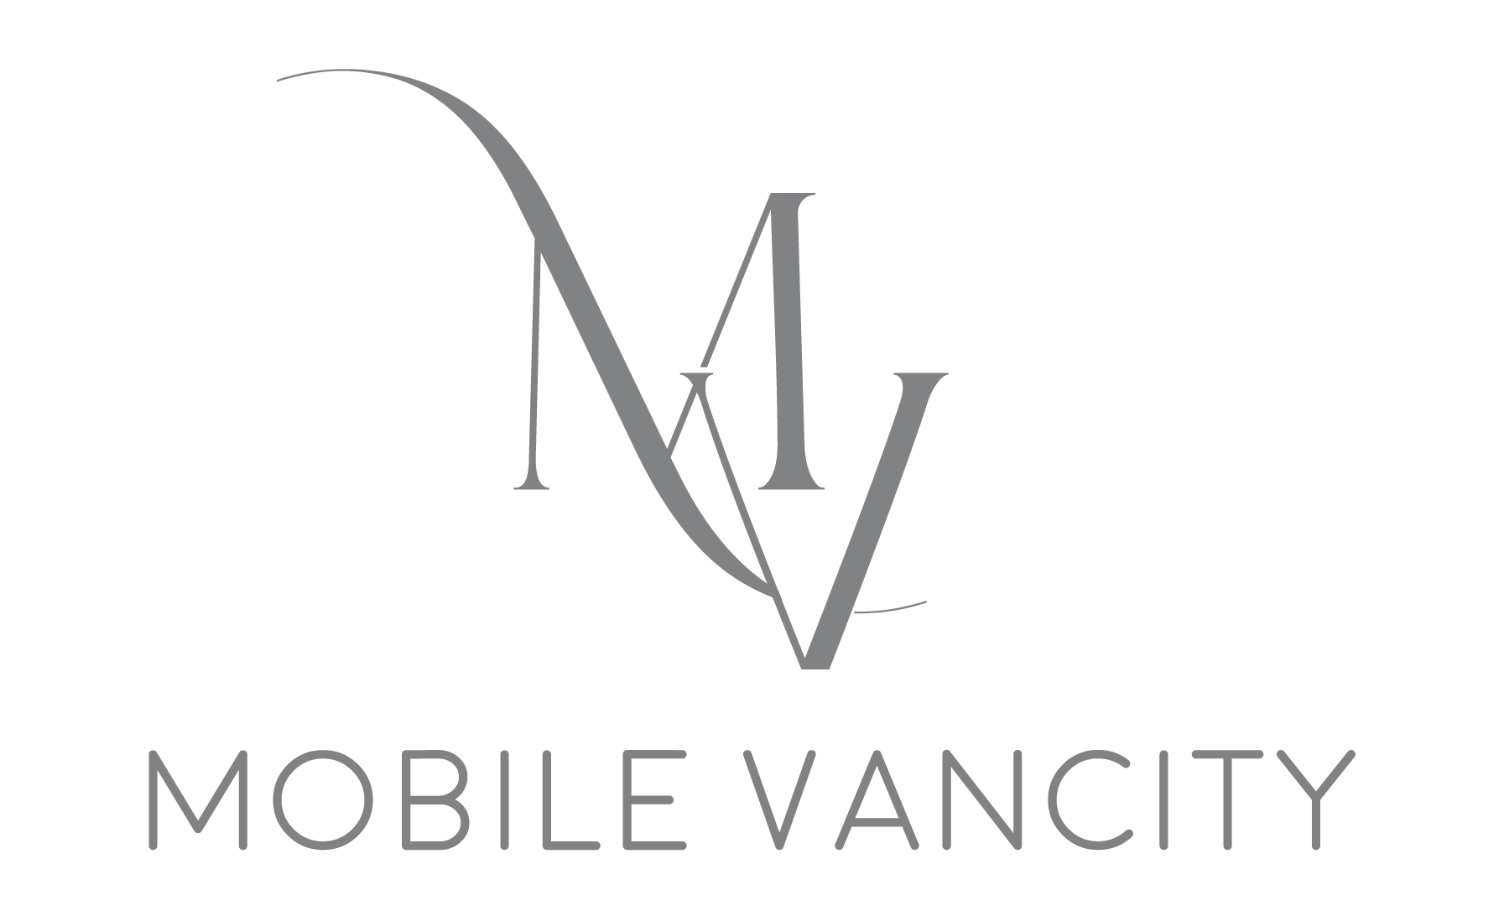 Mobile Vancity logo